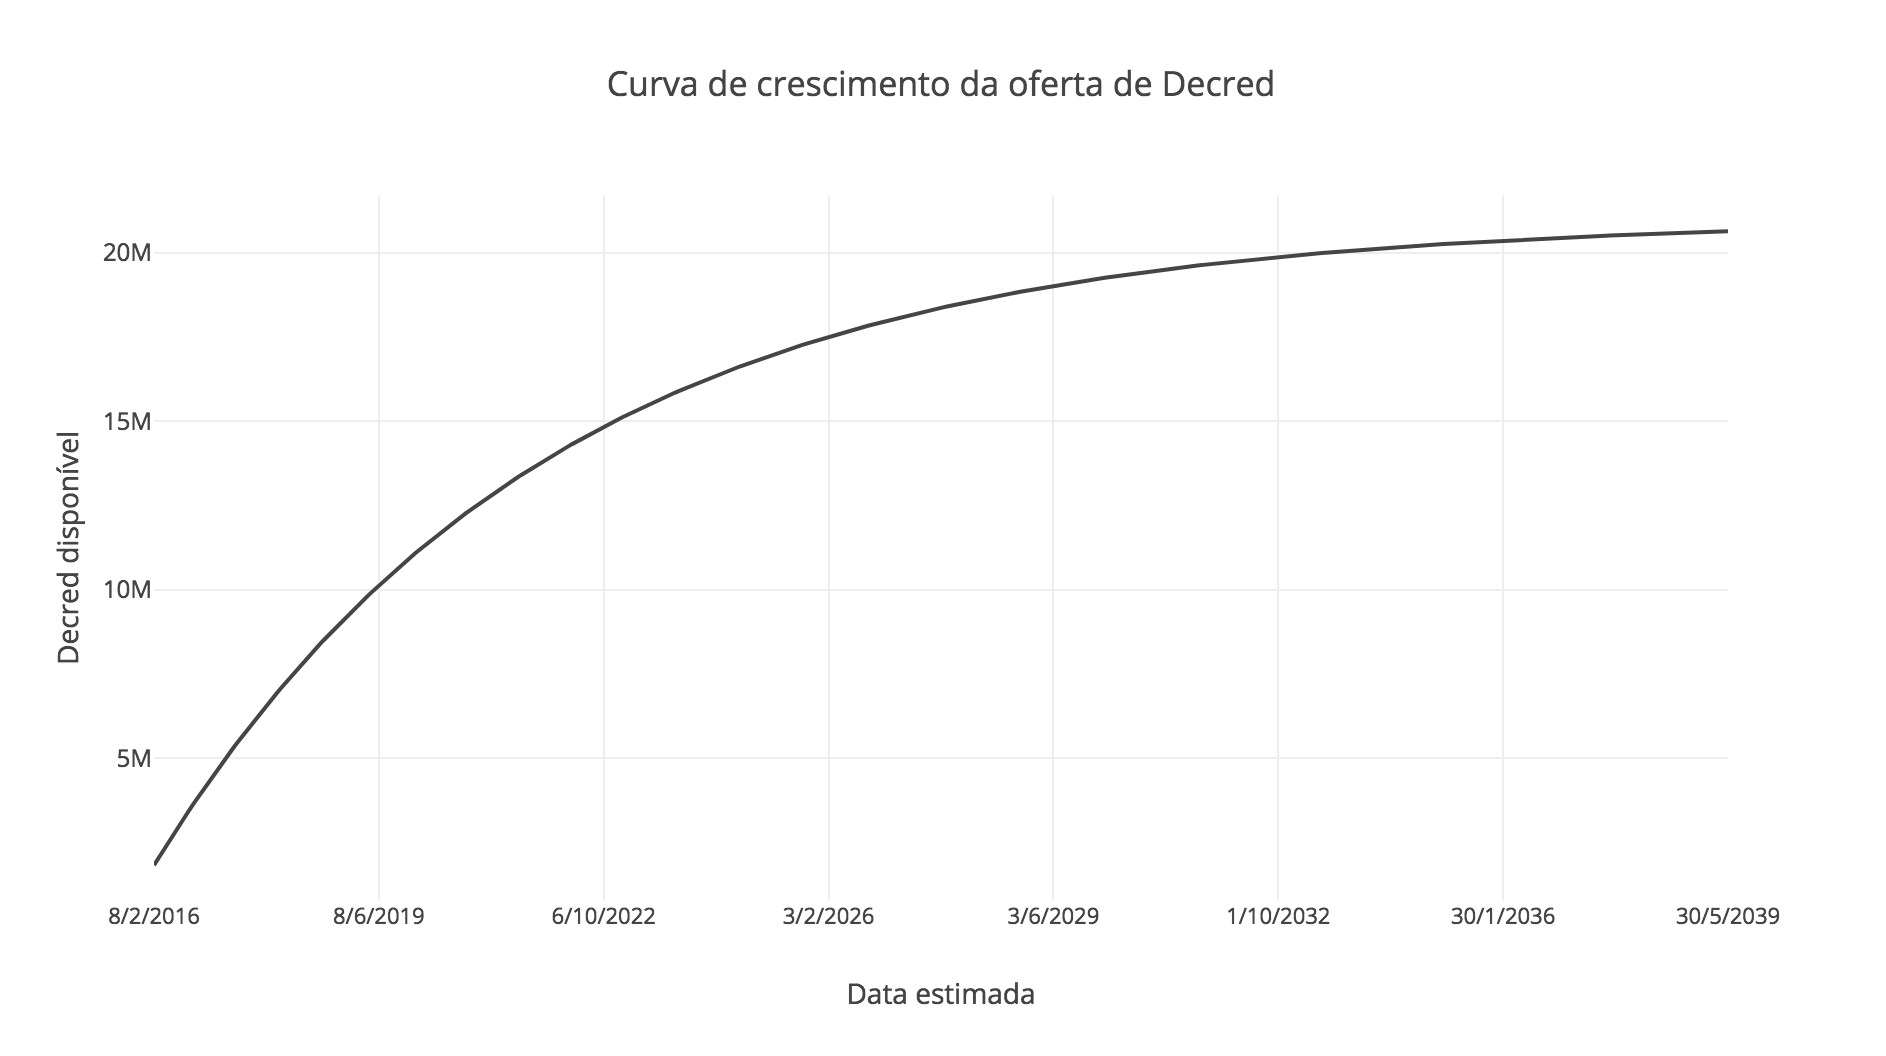 Figura 6 - Curva de crescimento da oferta de Decred